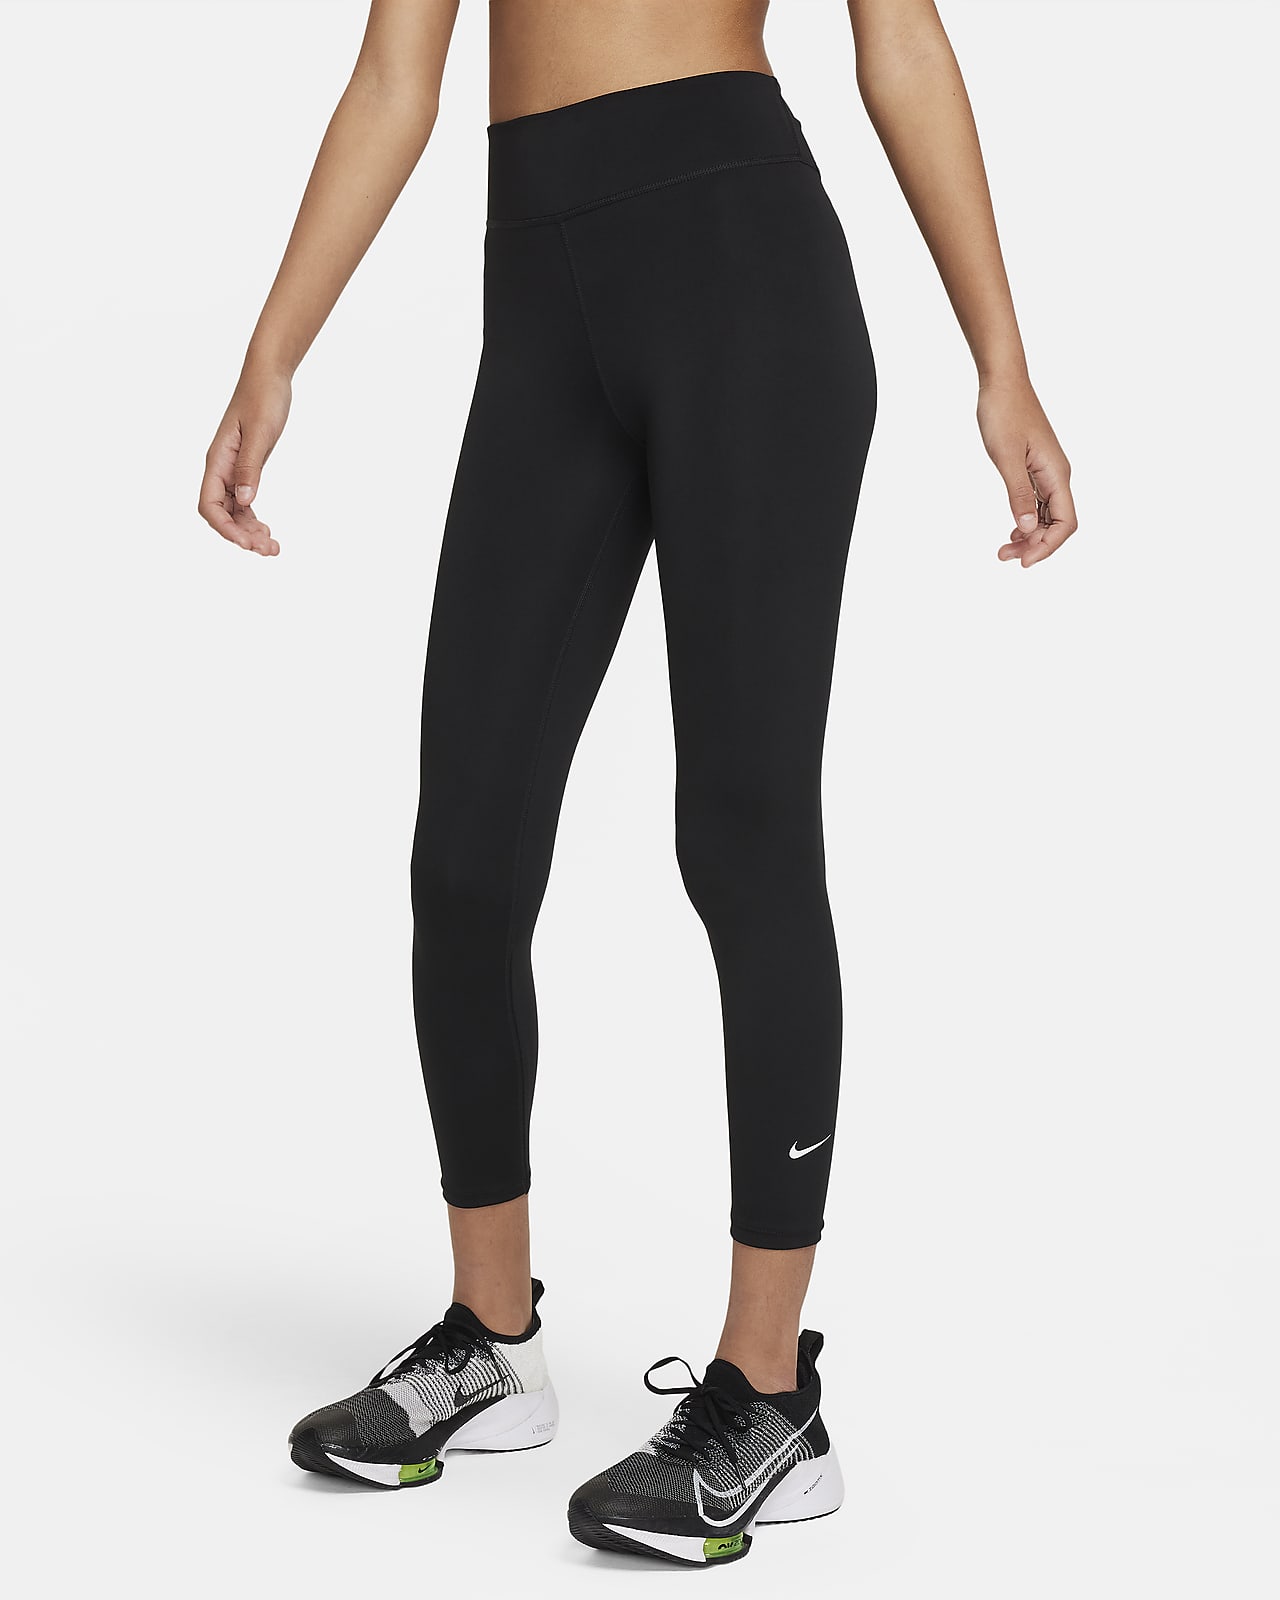 Leggings Nike Dri-FIT One för ungdomar (tjejer)